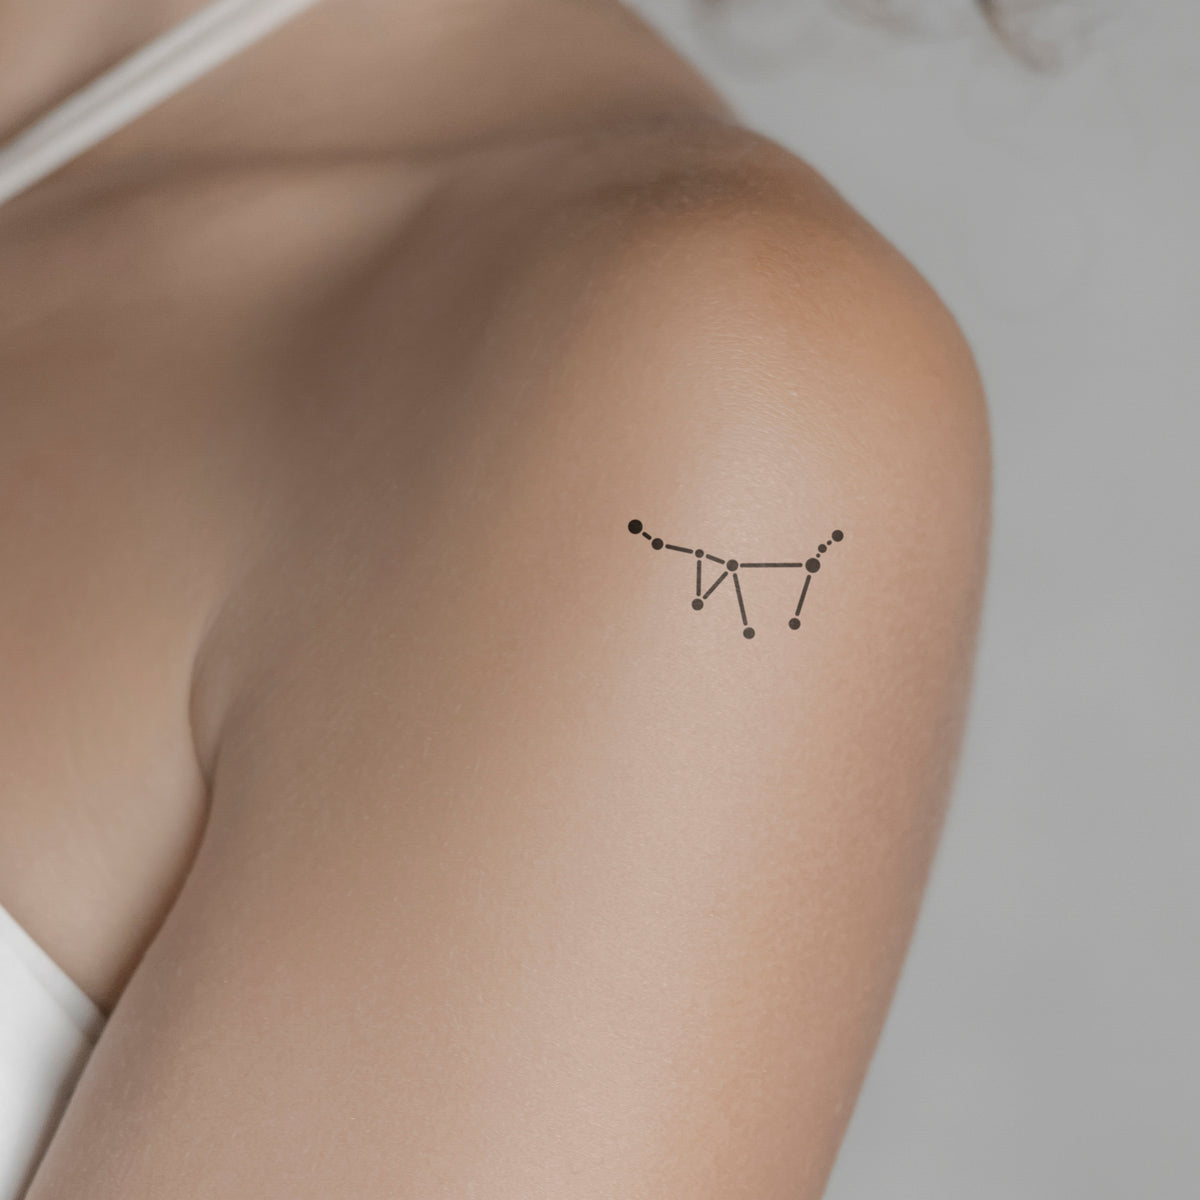 Capricornus constellation and crescent moon tattoo on